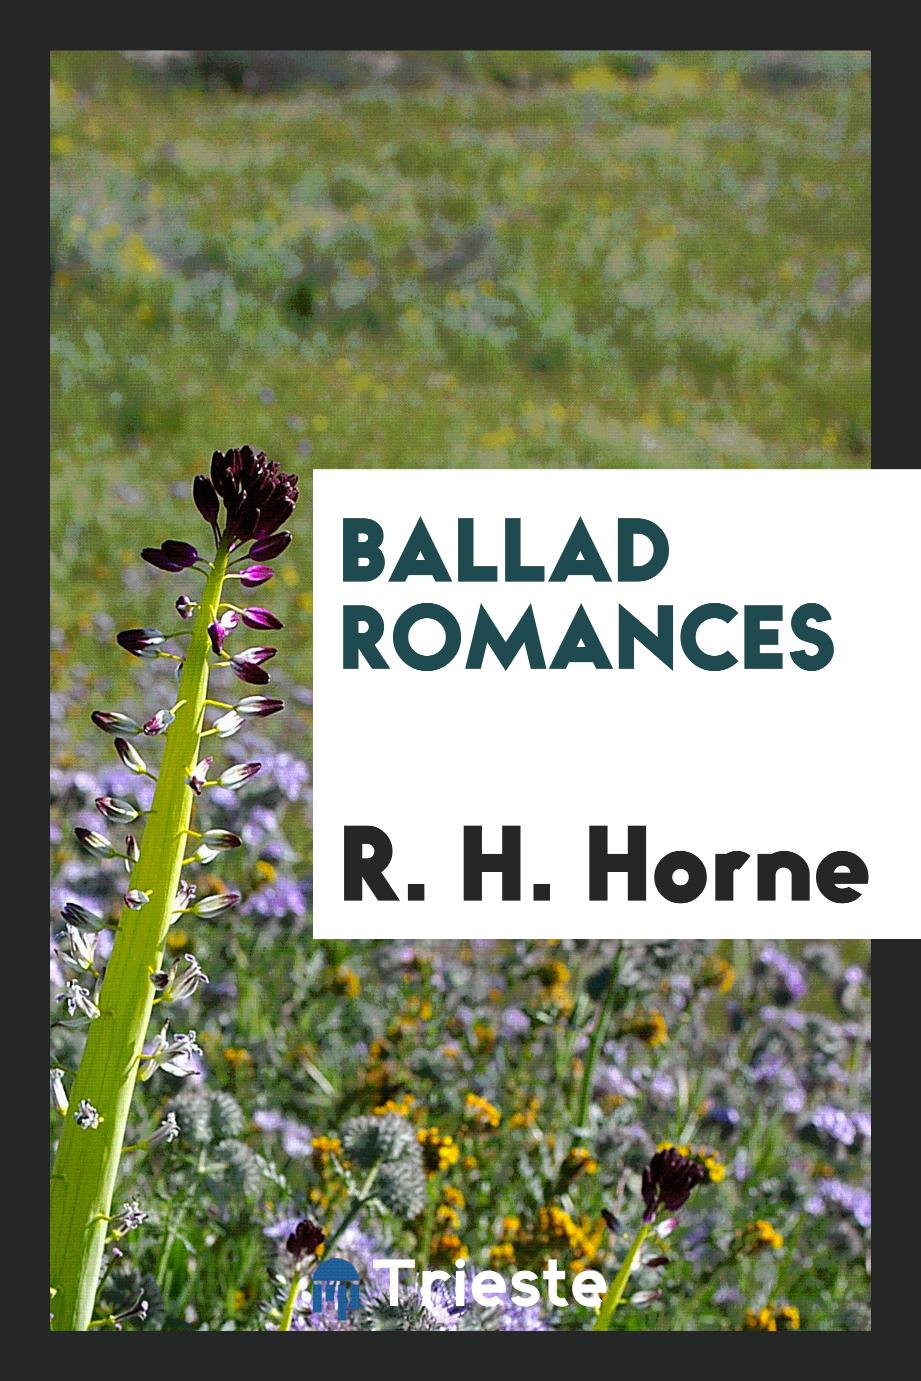 Ballad romances